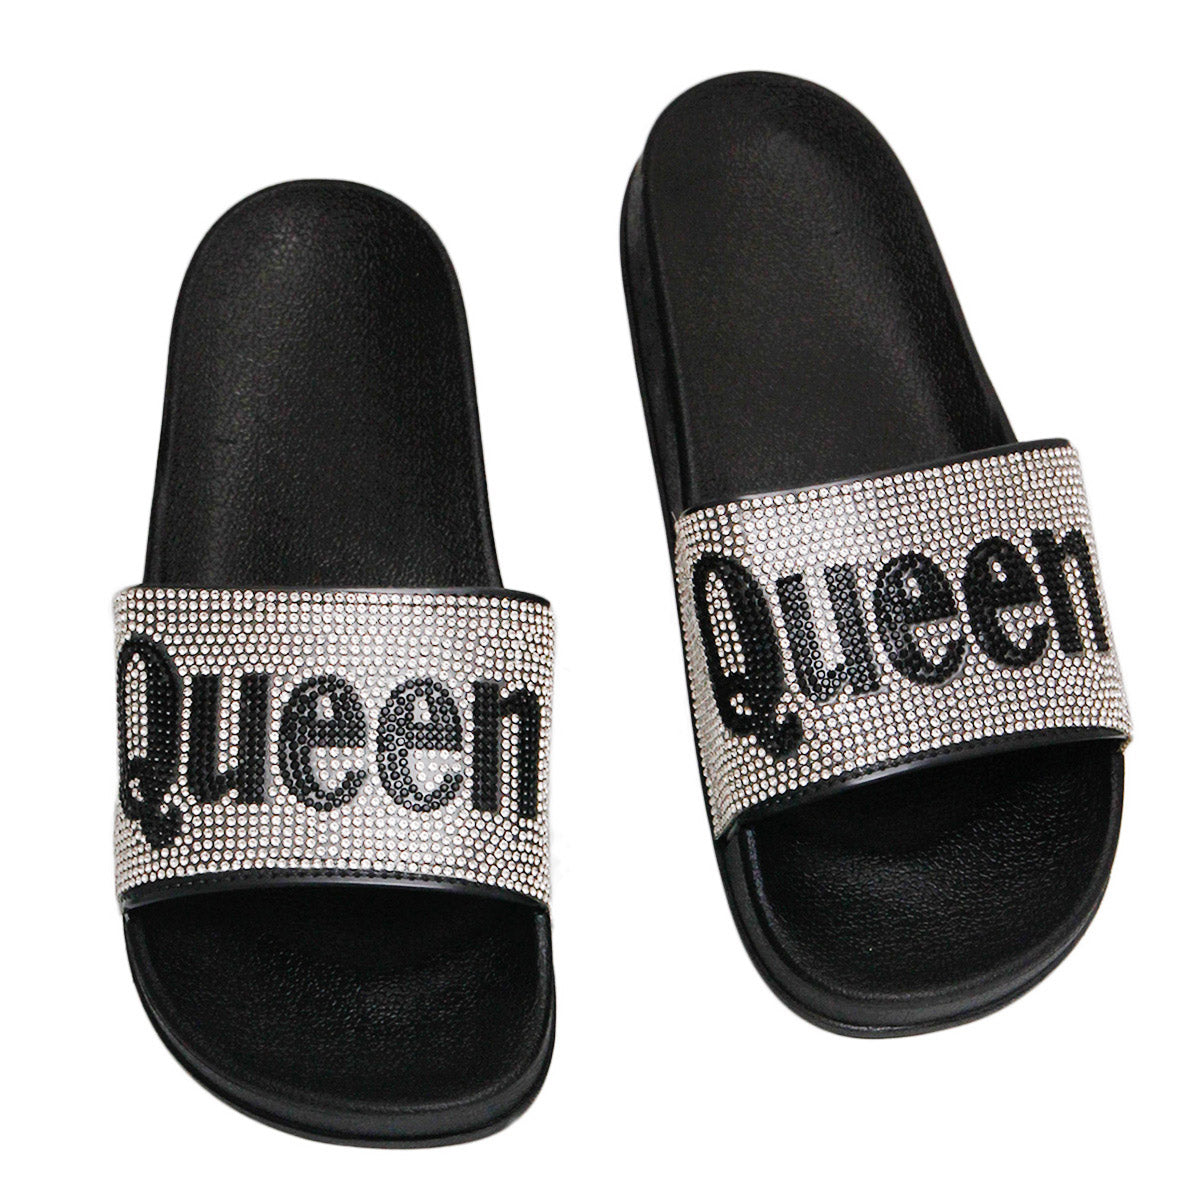 Size 8 Queen Silver Slides